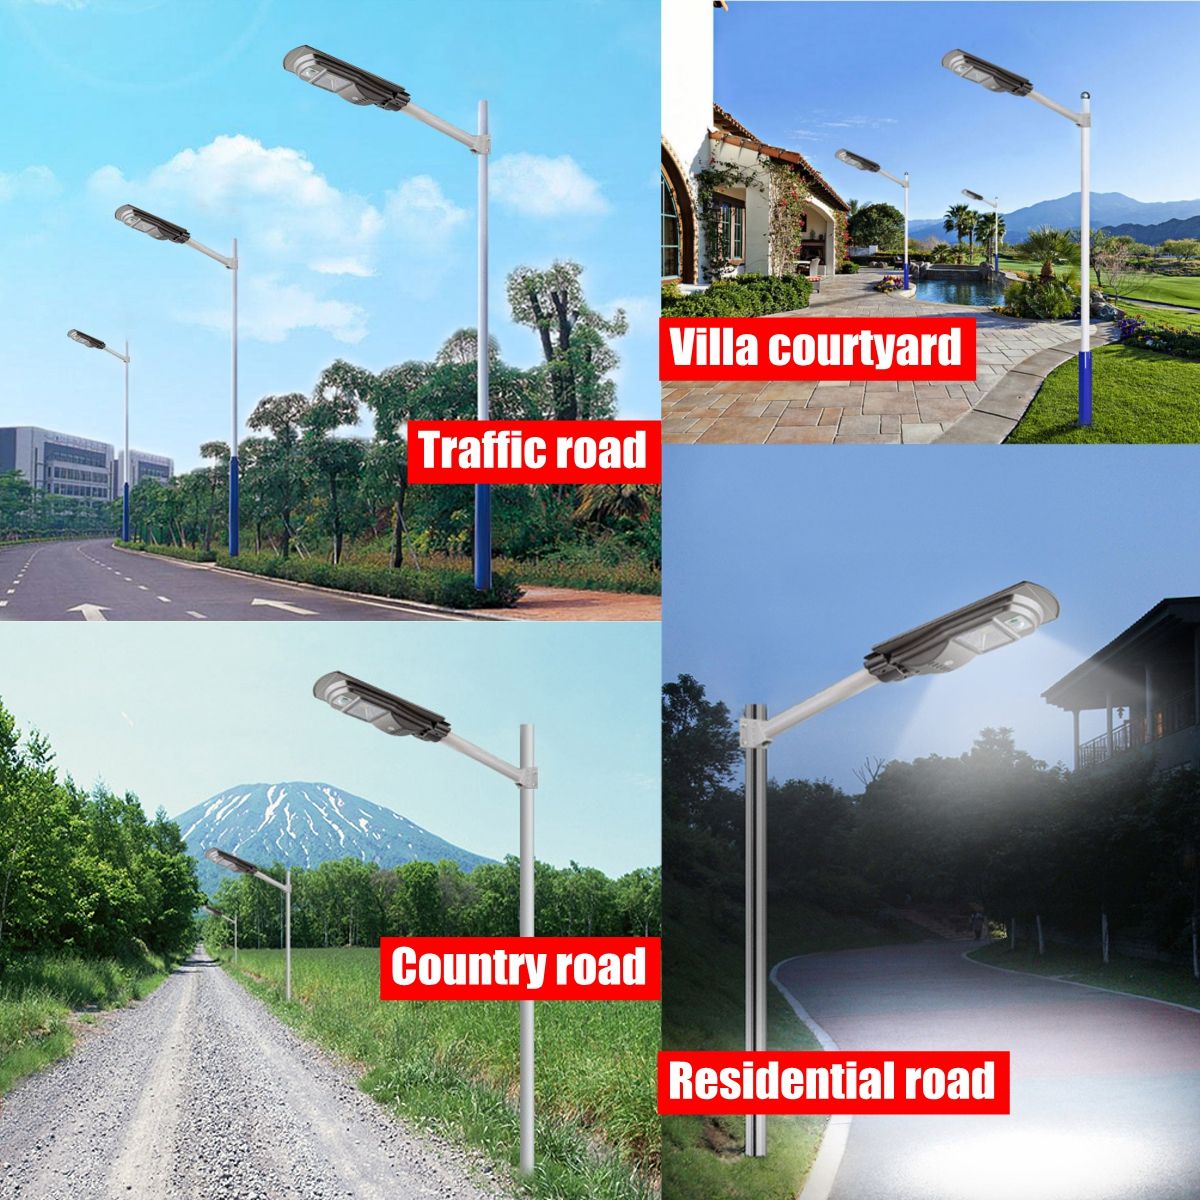 120240360W-LED-Wall-Street-Light-Solar-Power-Radar-Sensing-Lamp-Garden-Remote-1675774